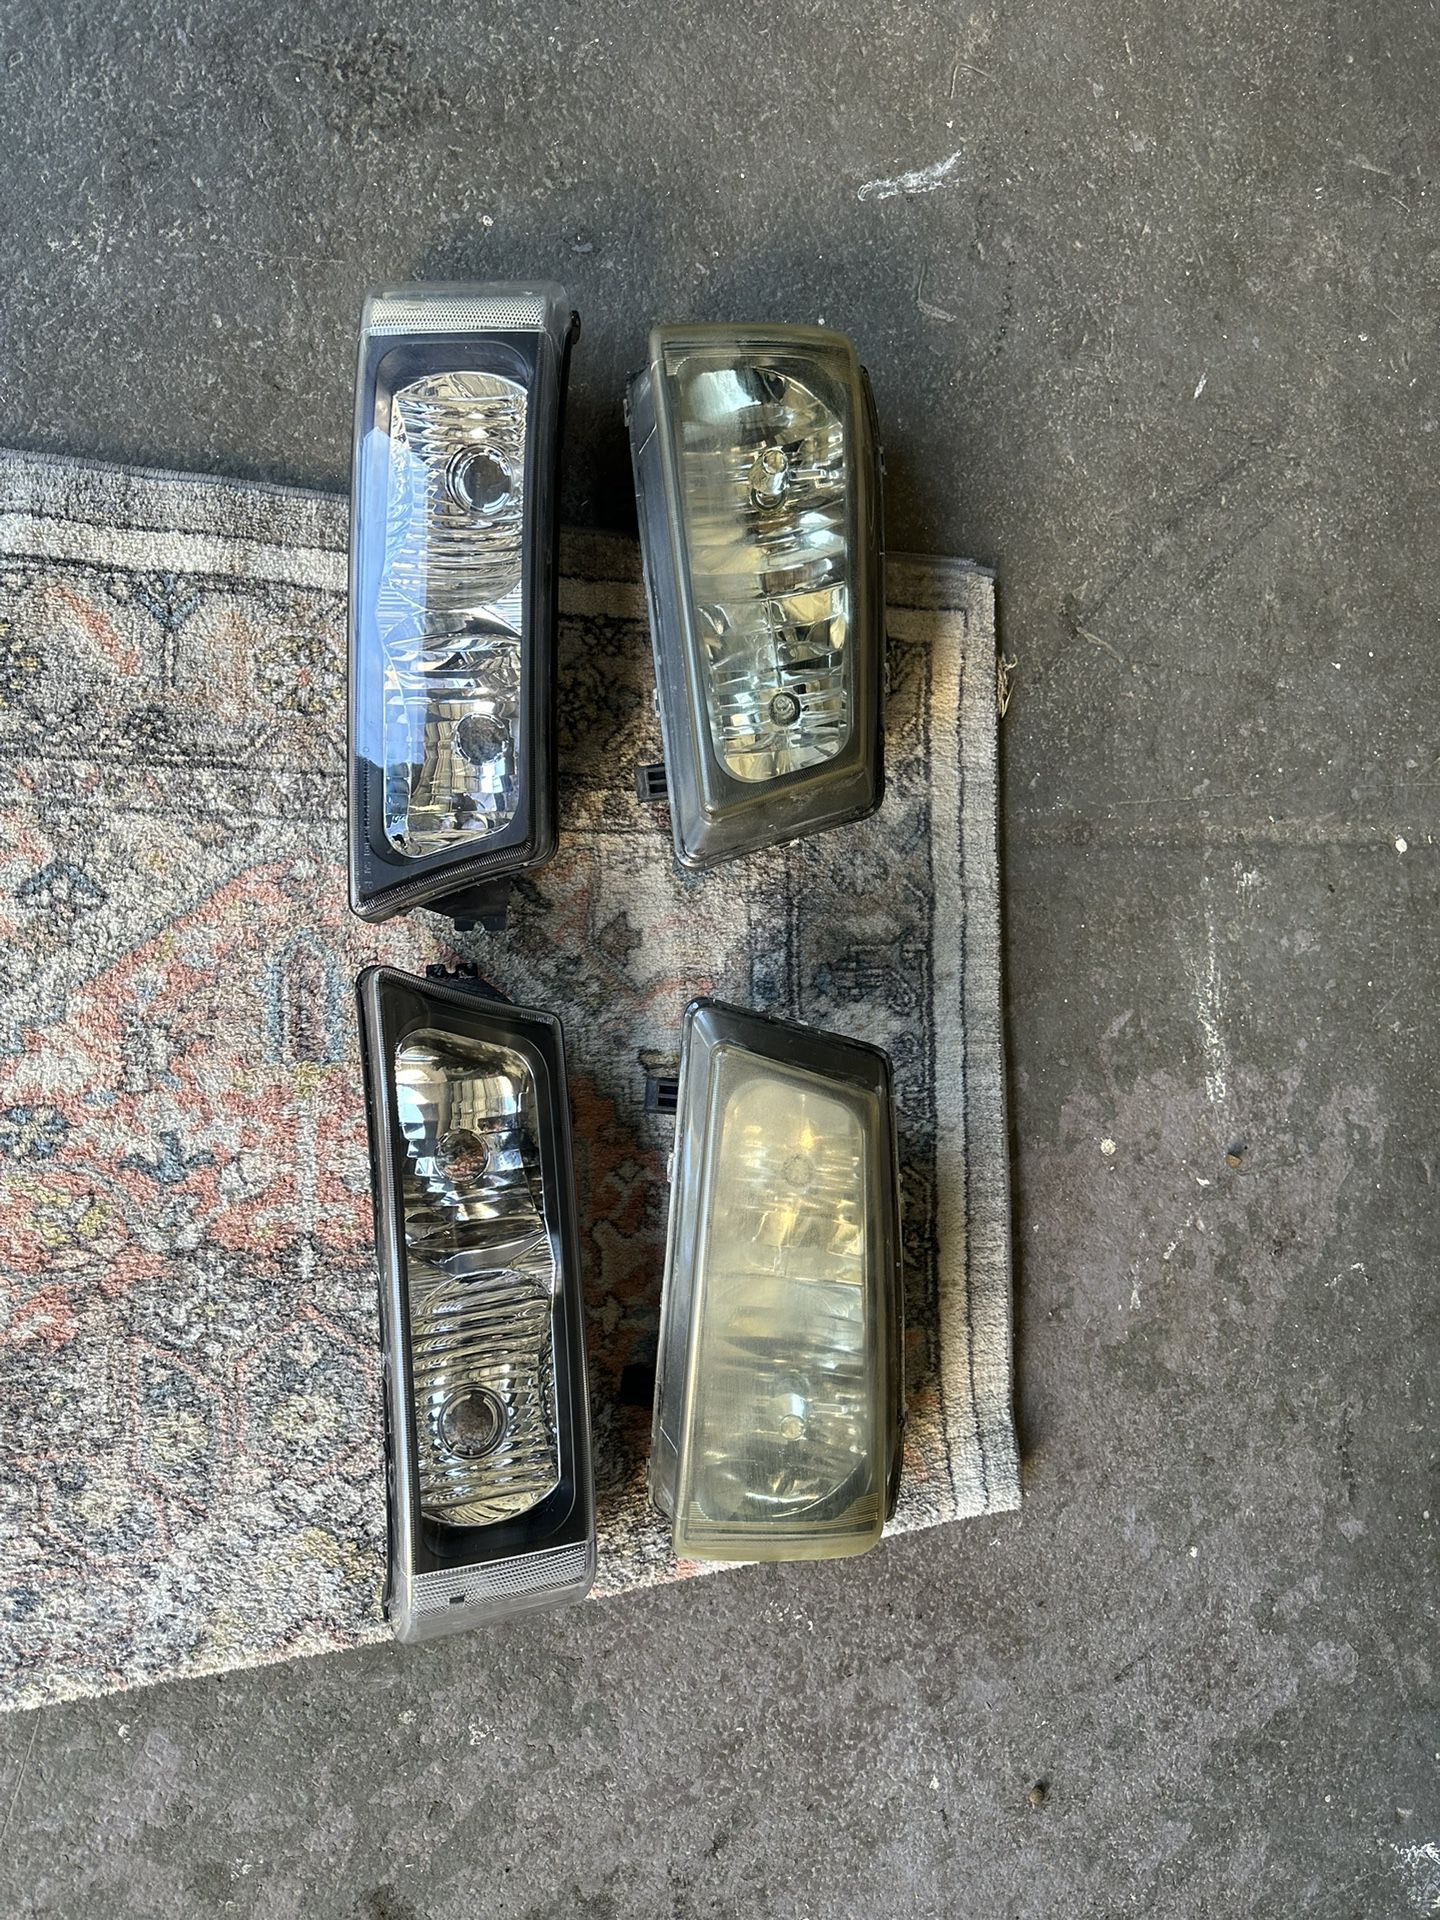 03-06 Chevy Silverado 4piece Headlight Set $60